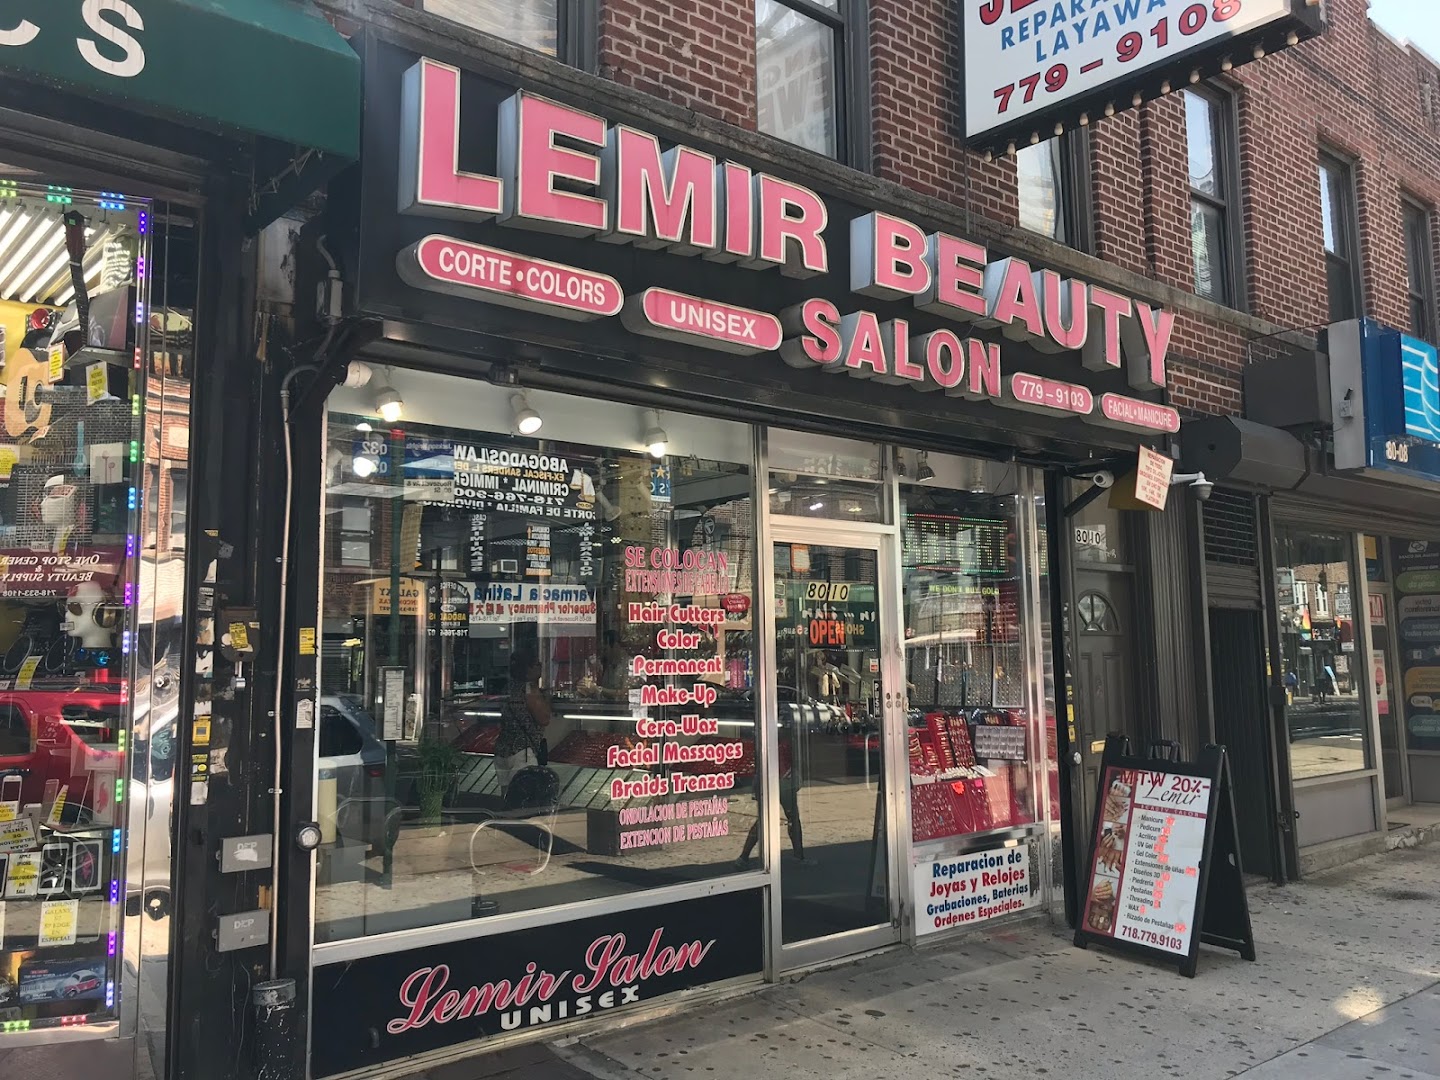 Lemir Beauty Salon & Spa